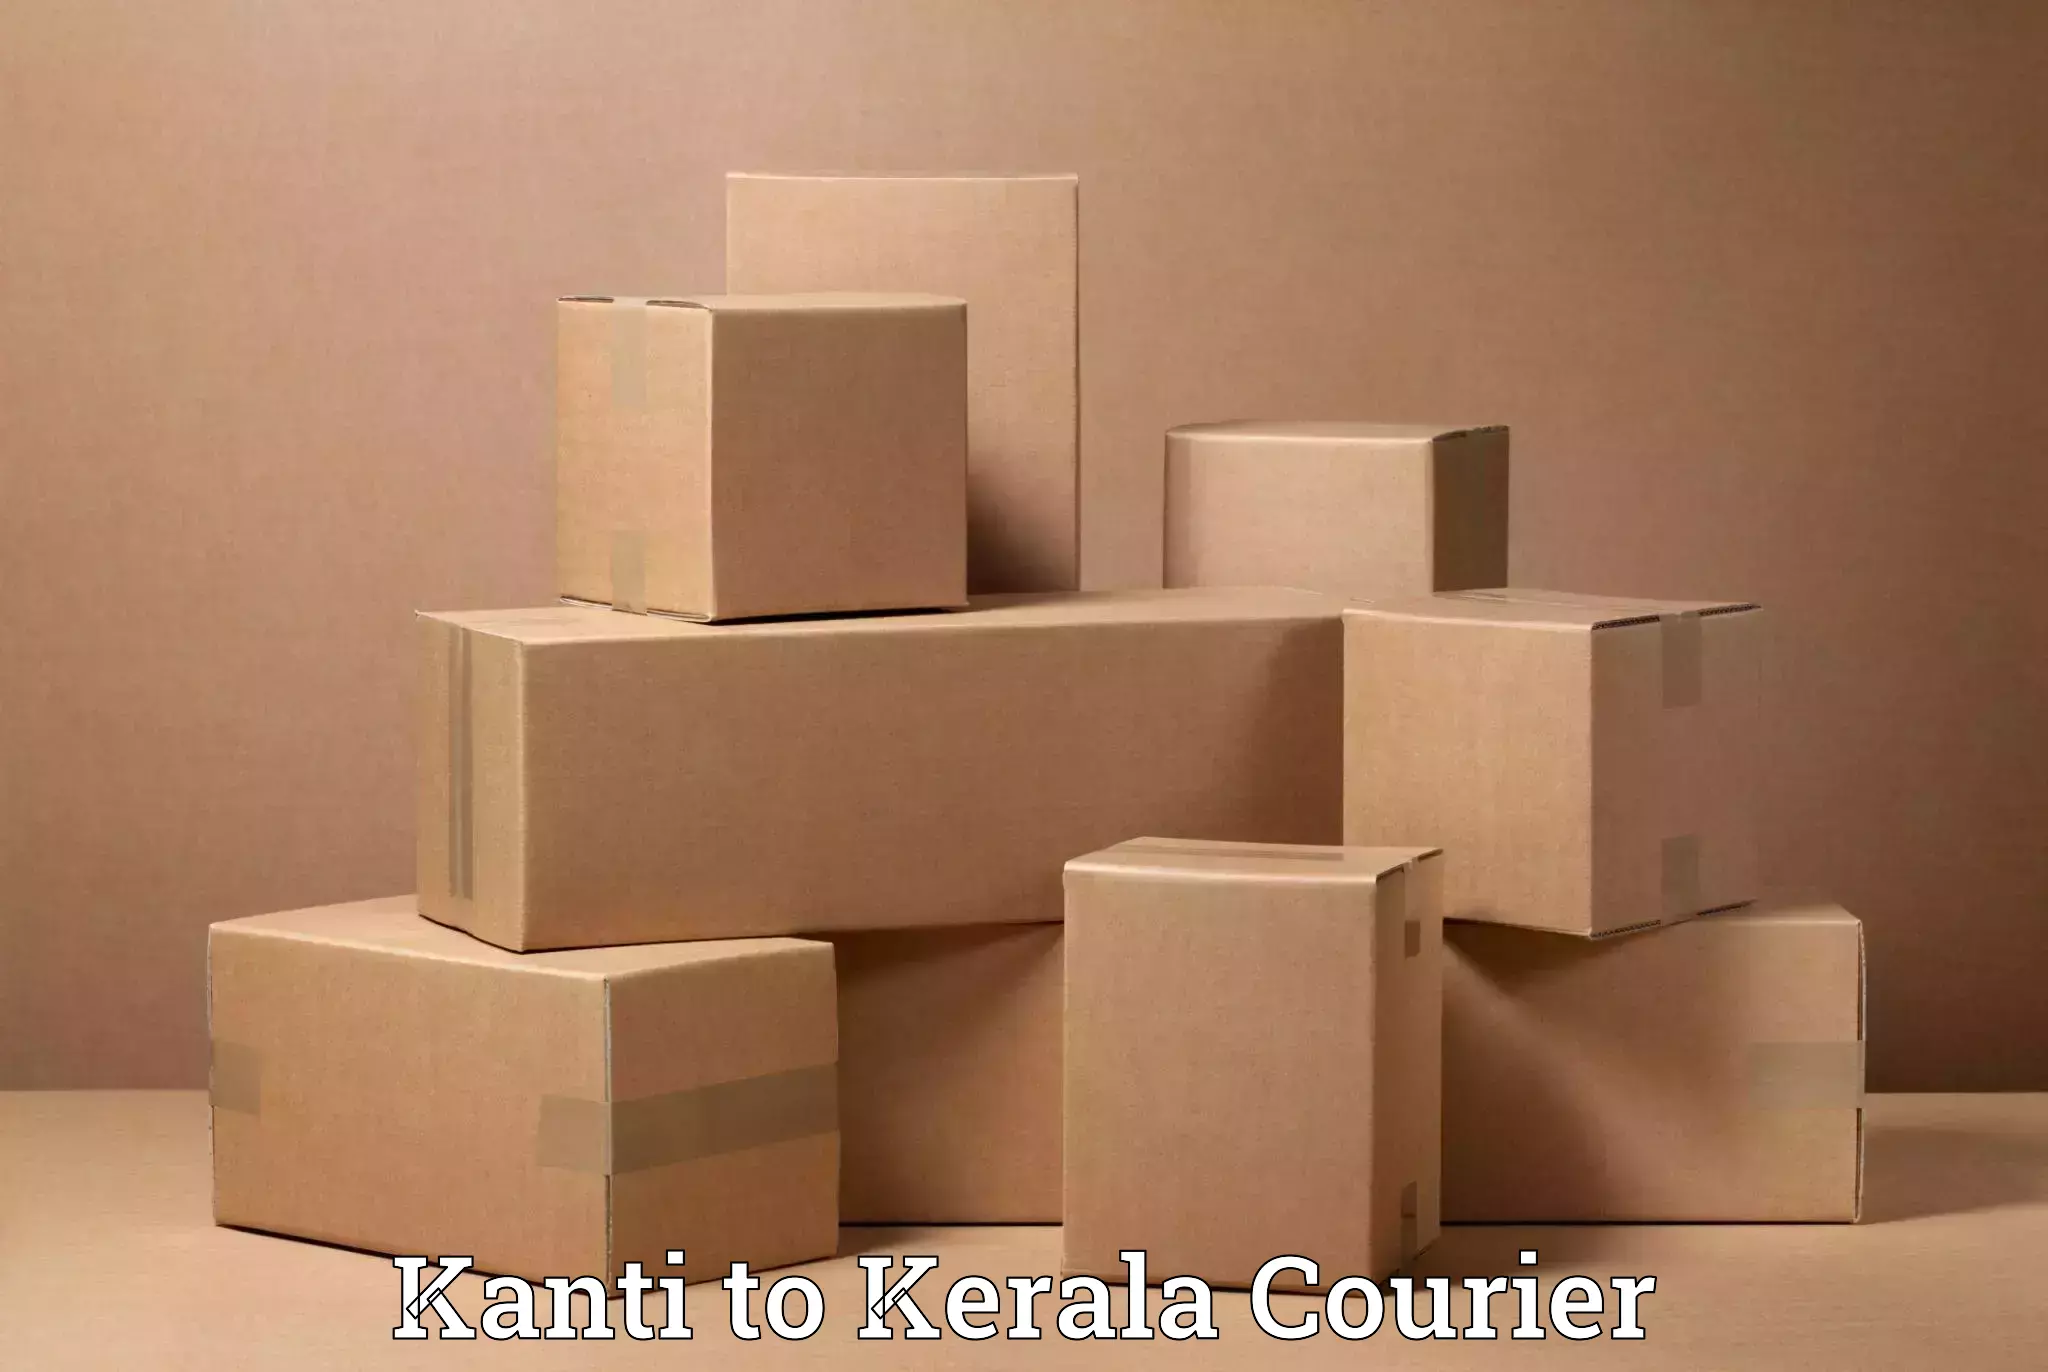 Quality moving company Kanti to Kerala